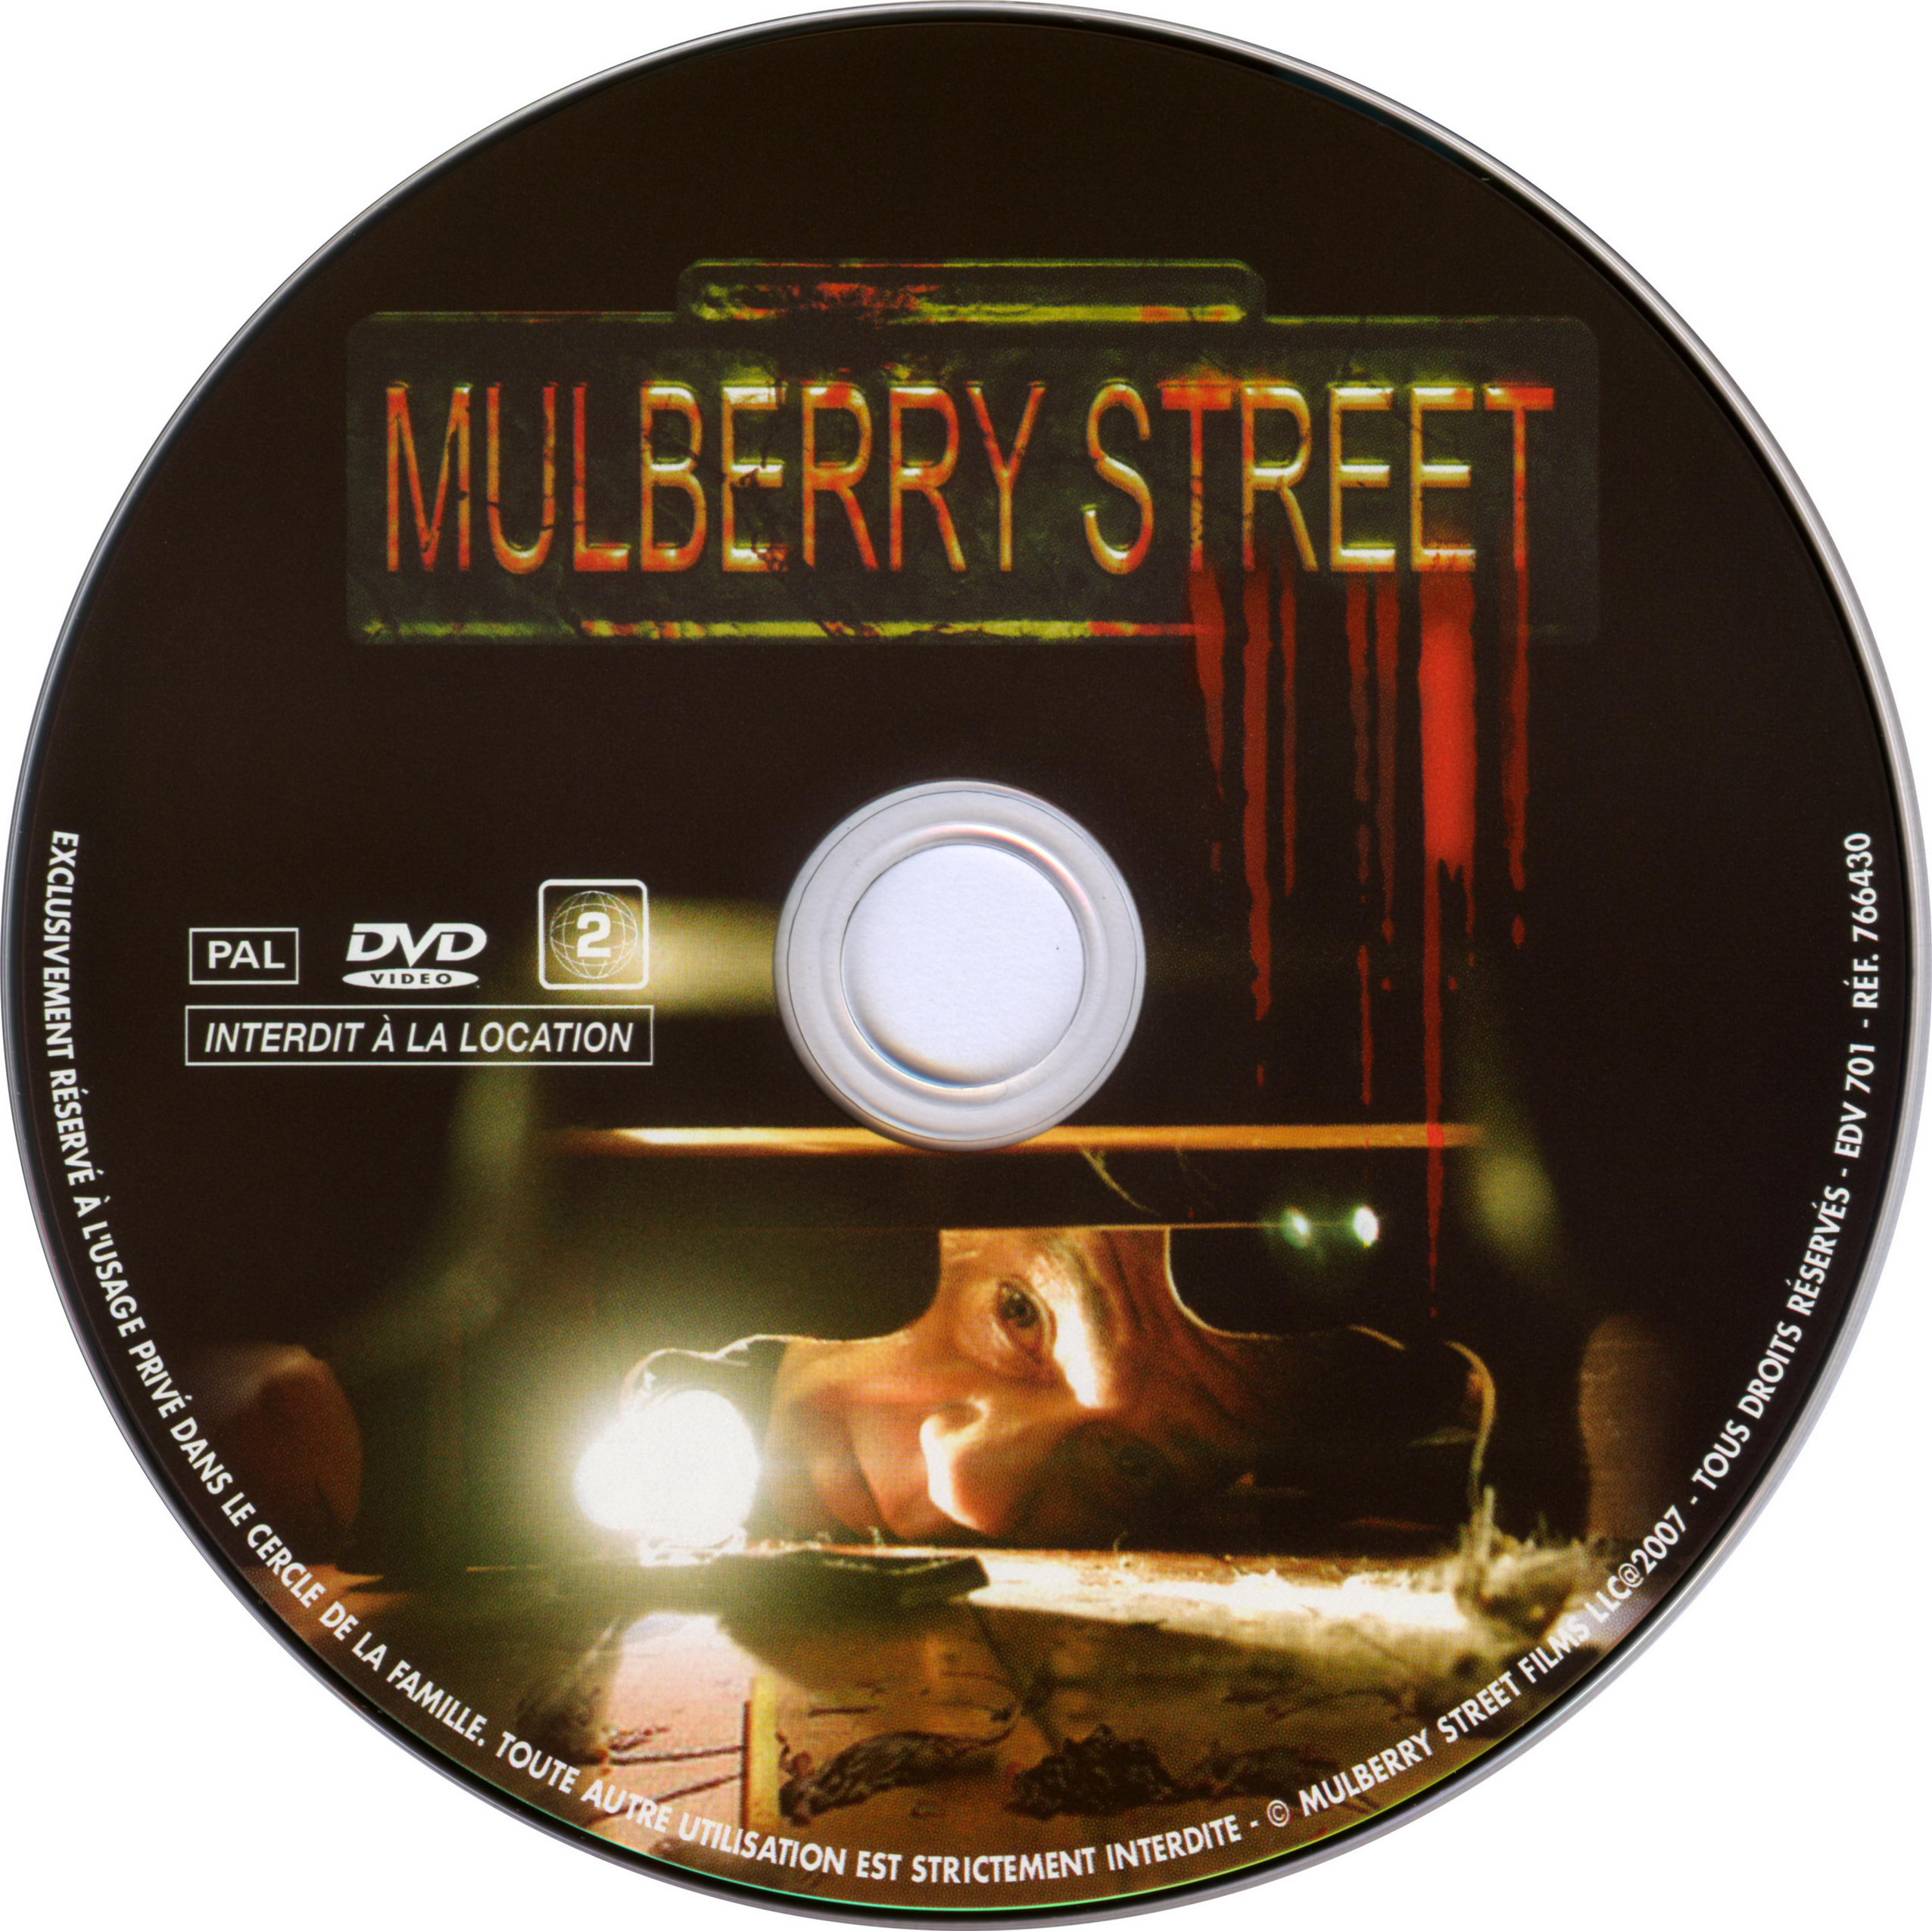 Mulberry street